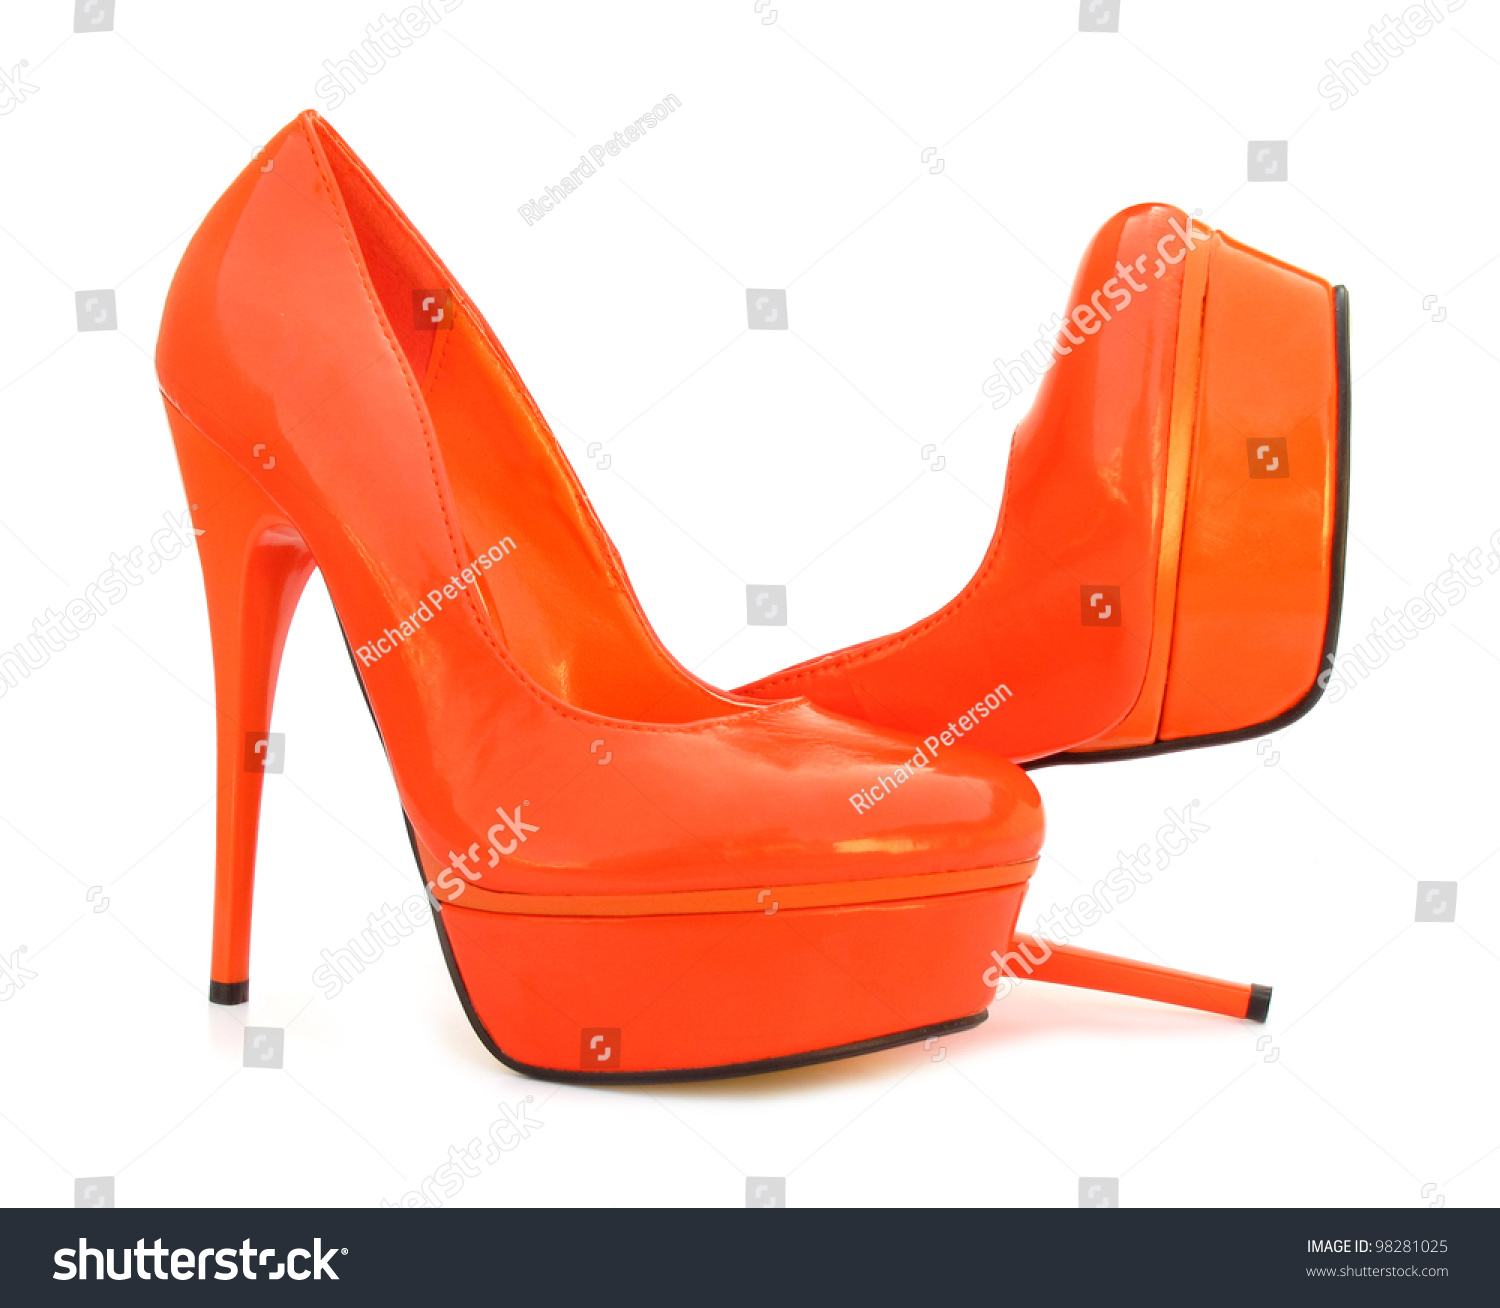 Orange High Heels Pump Shoes Stock Photo 98281025 : Shutterstock